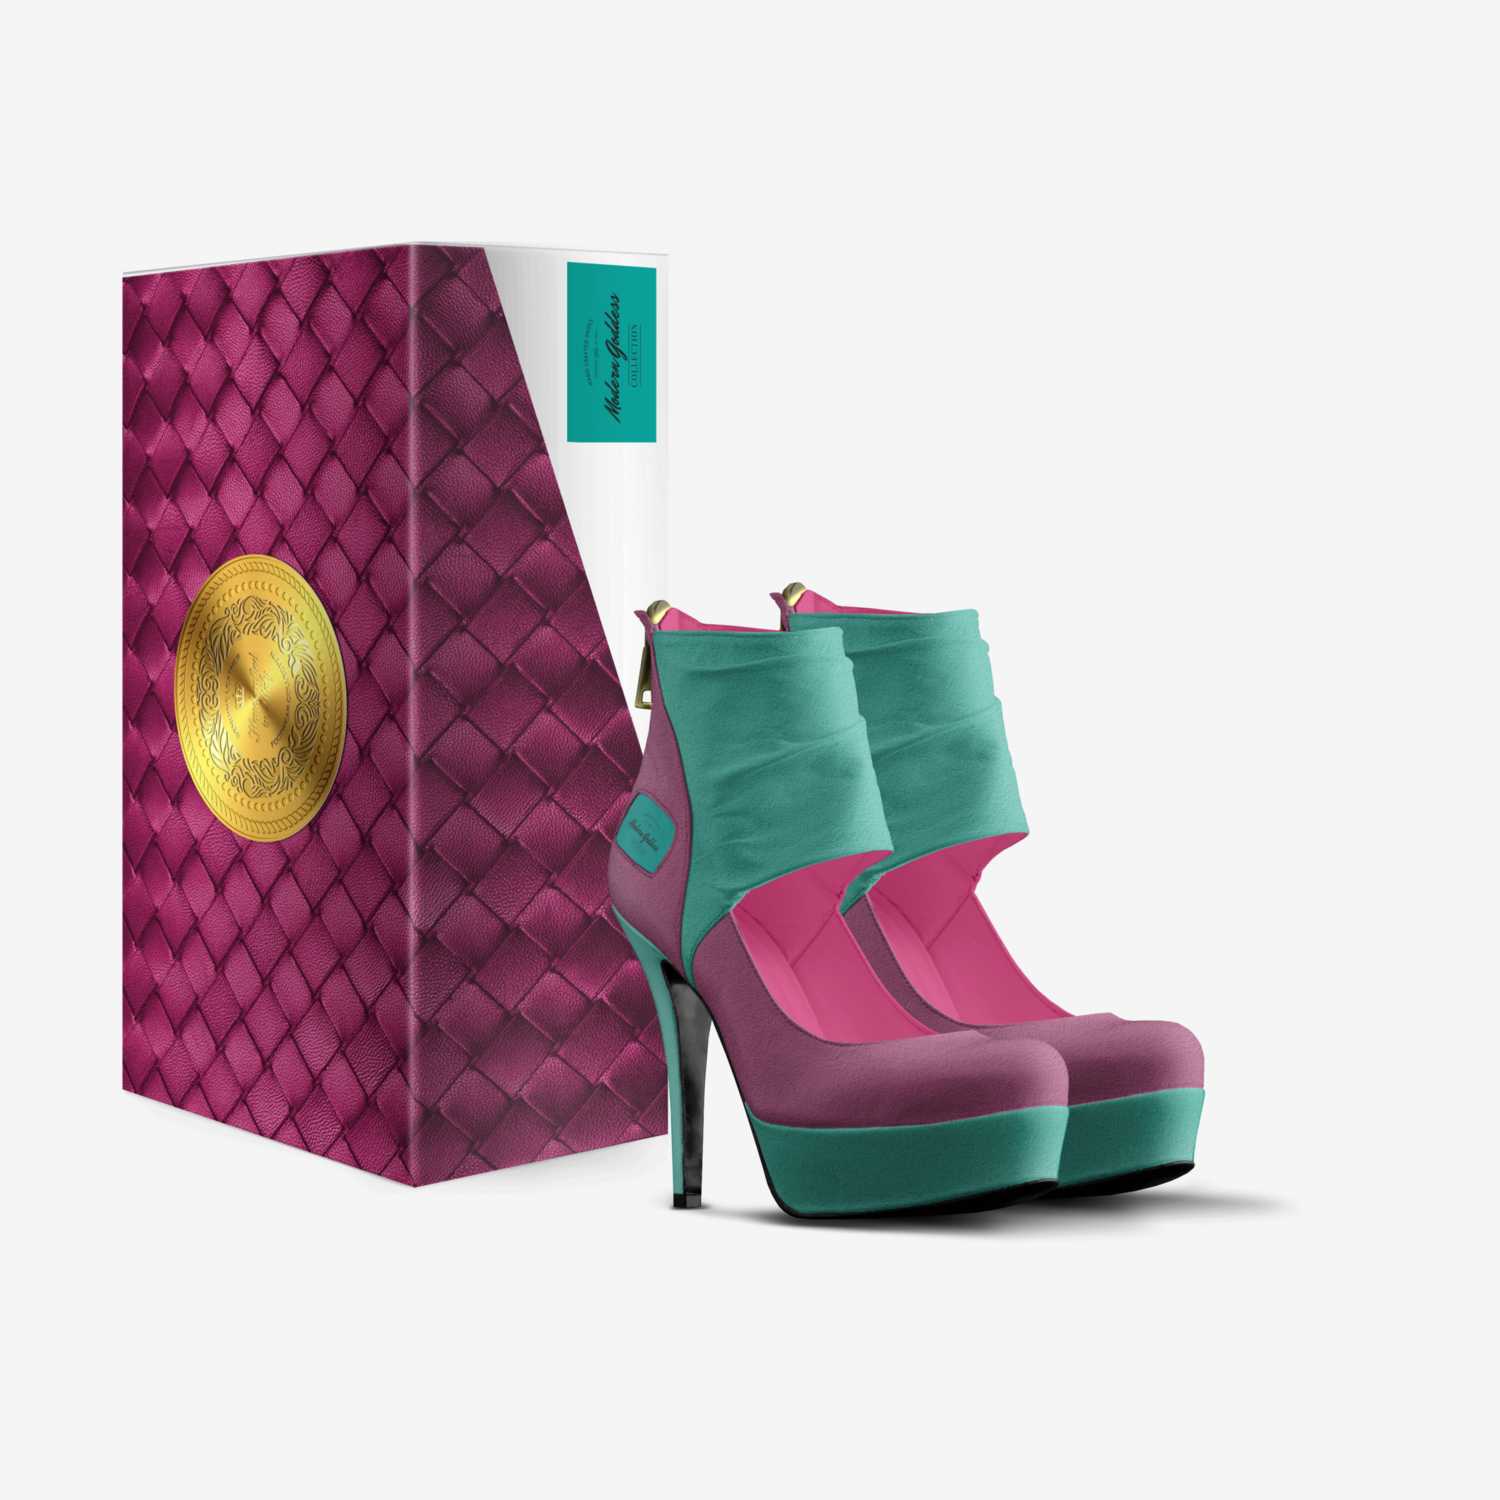 ZZ HEELS  custom made in Italy shoes by Zeanetta Bradley | Box view